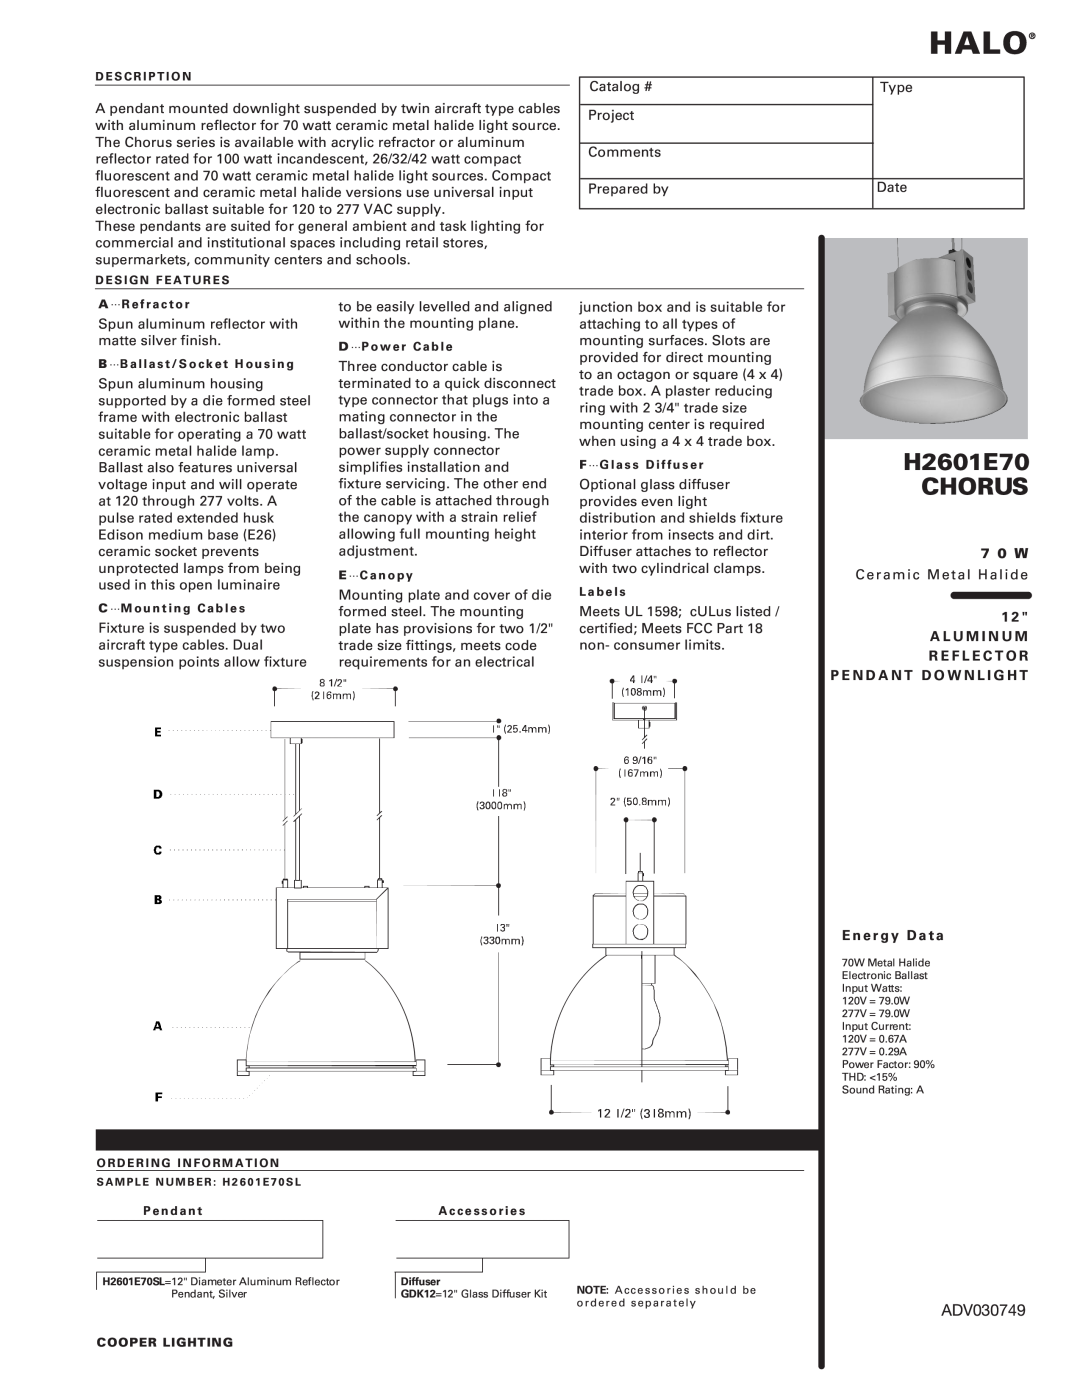 Cooper Lighting H2601E70 Chorus manual , ,  